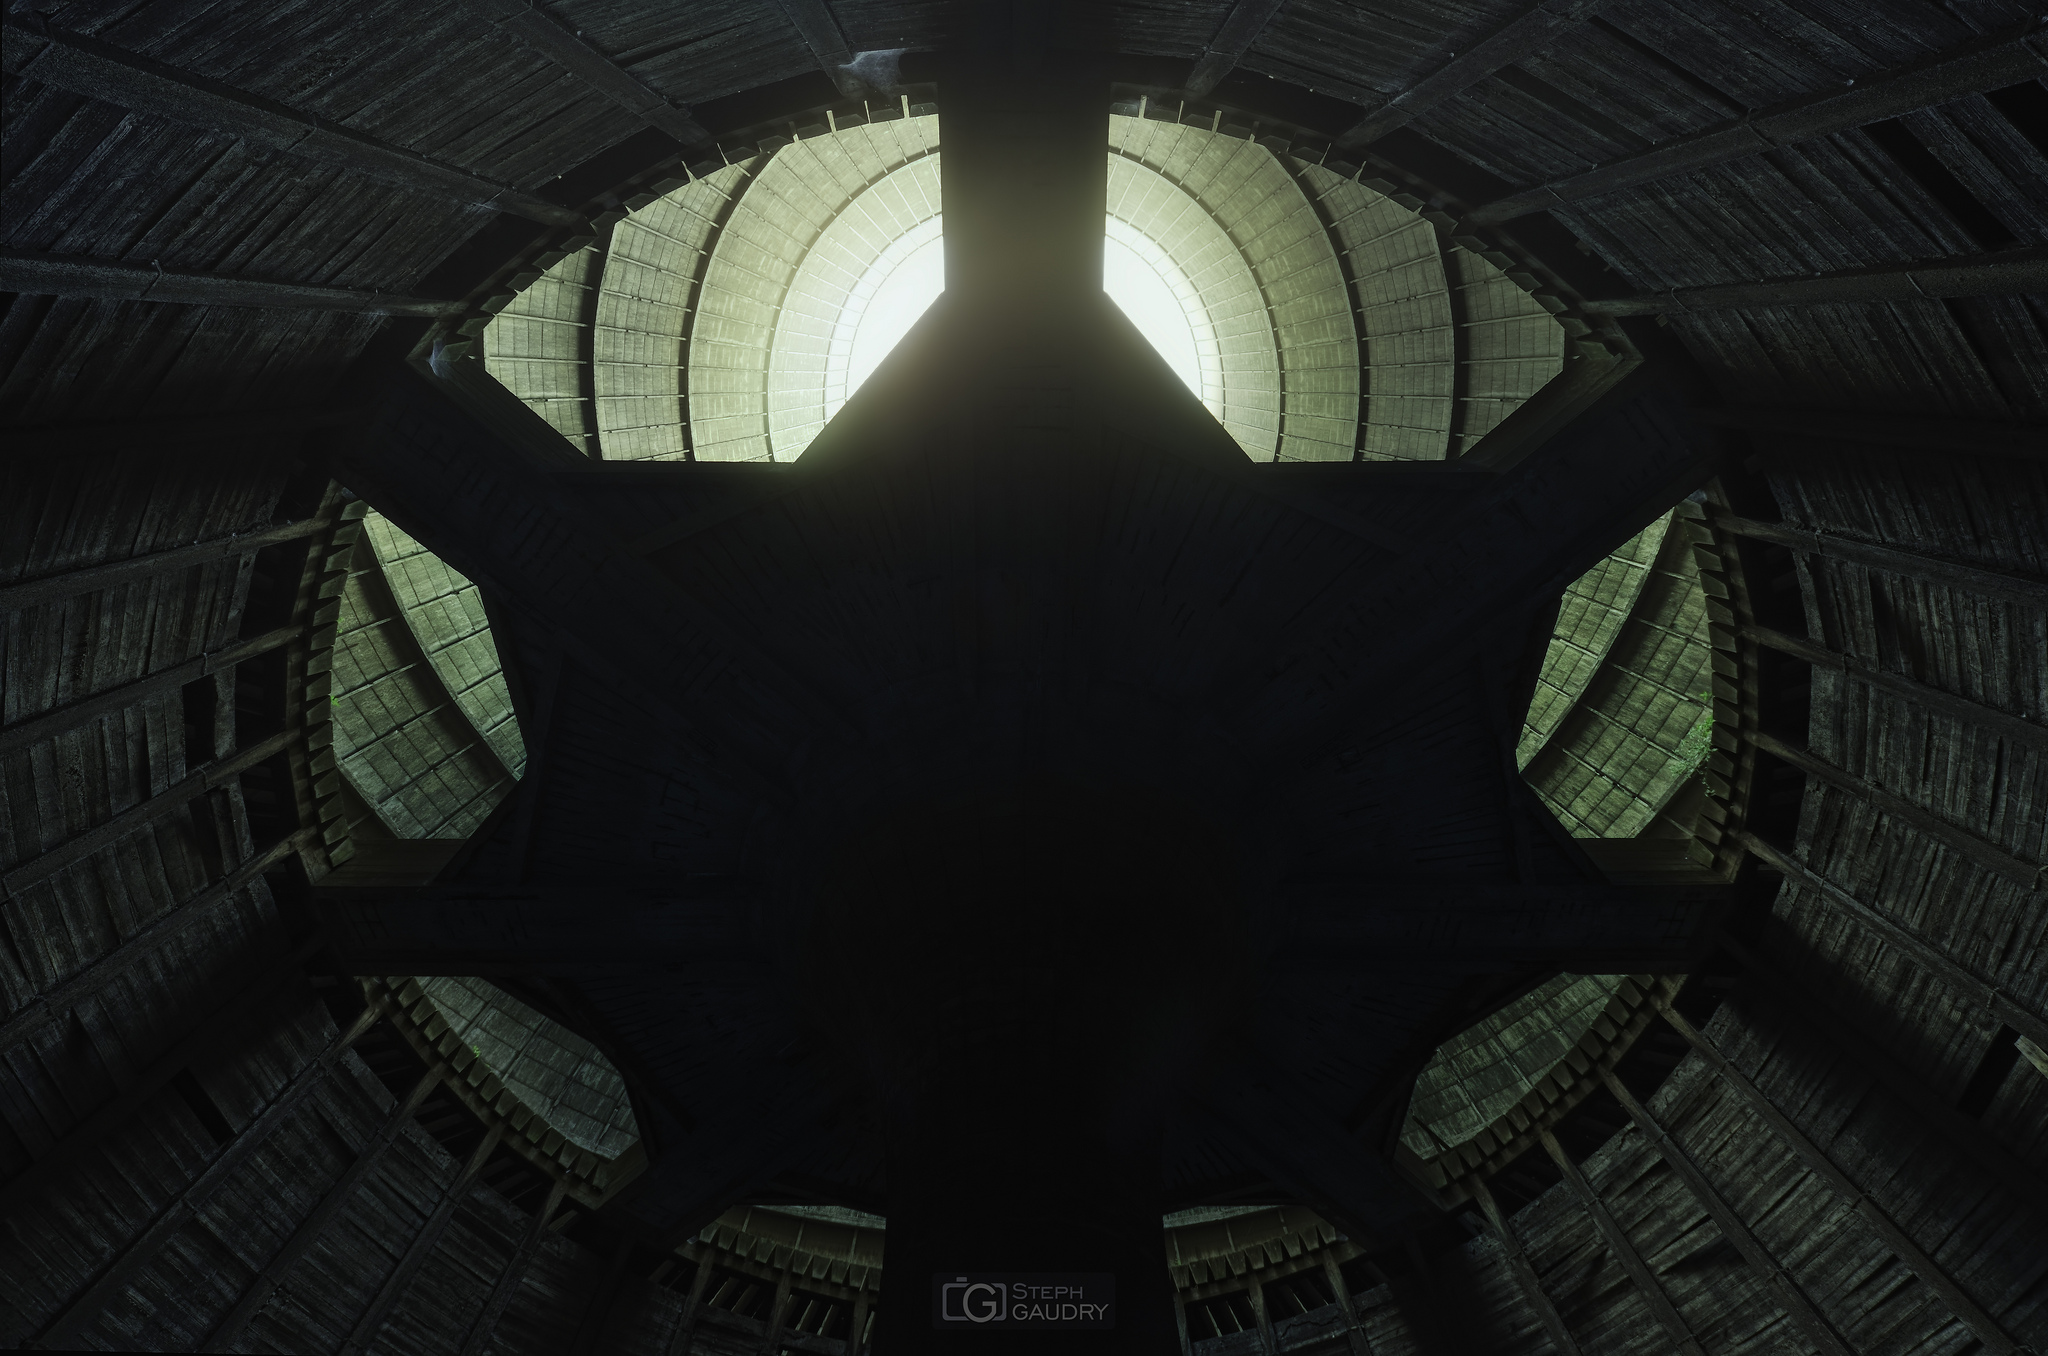 Centrales électriques / Inside the Death Star (full circle)